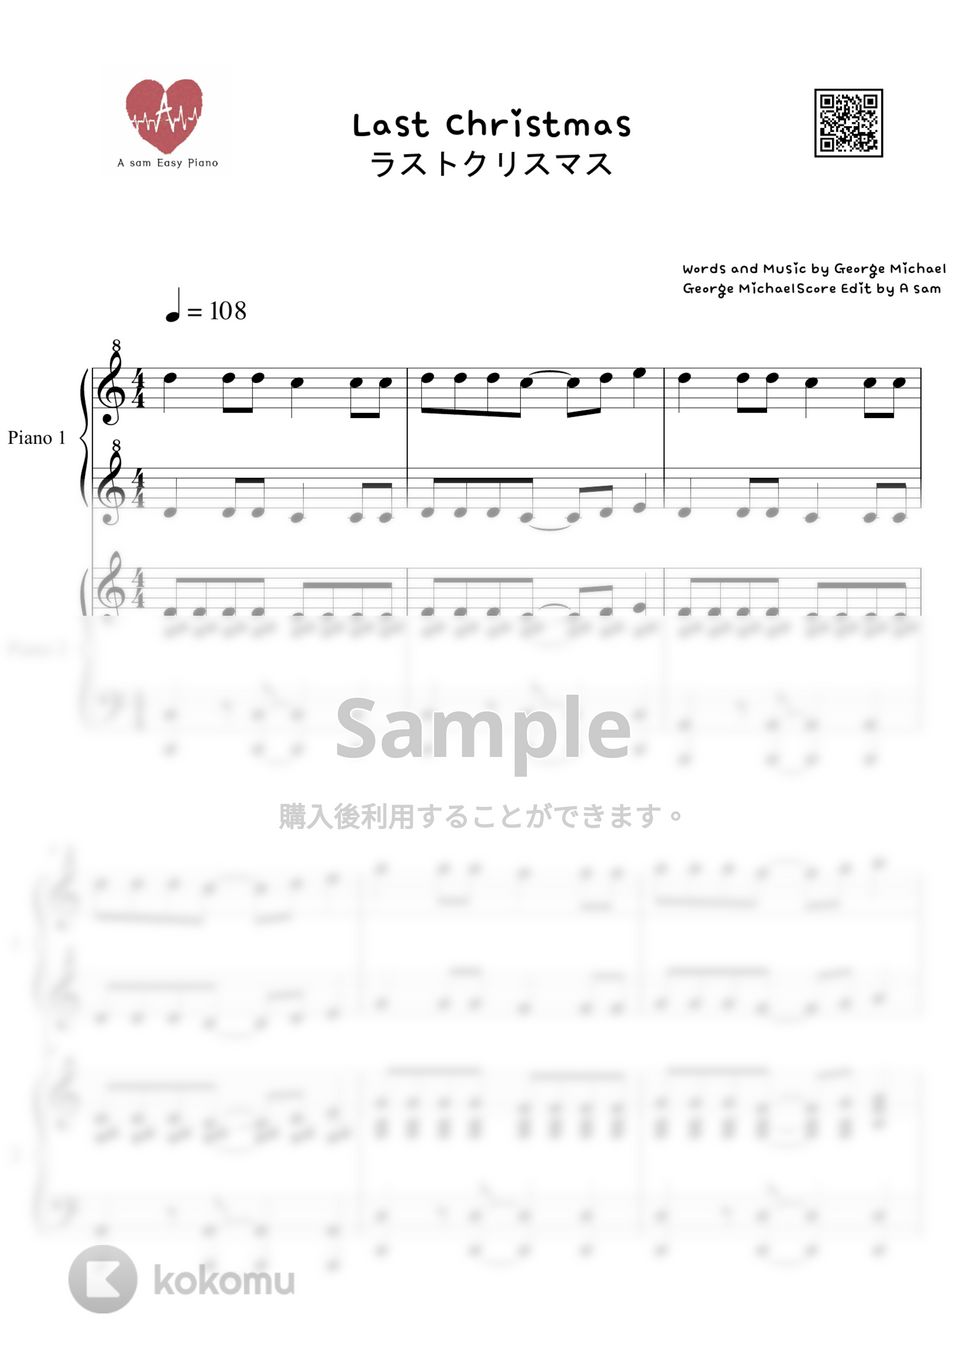 Wham! - Last Christmas (4 hands) (ピアノ連弾 / 伴奏音源付き) by A-sam